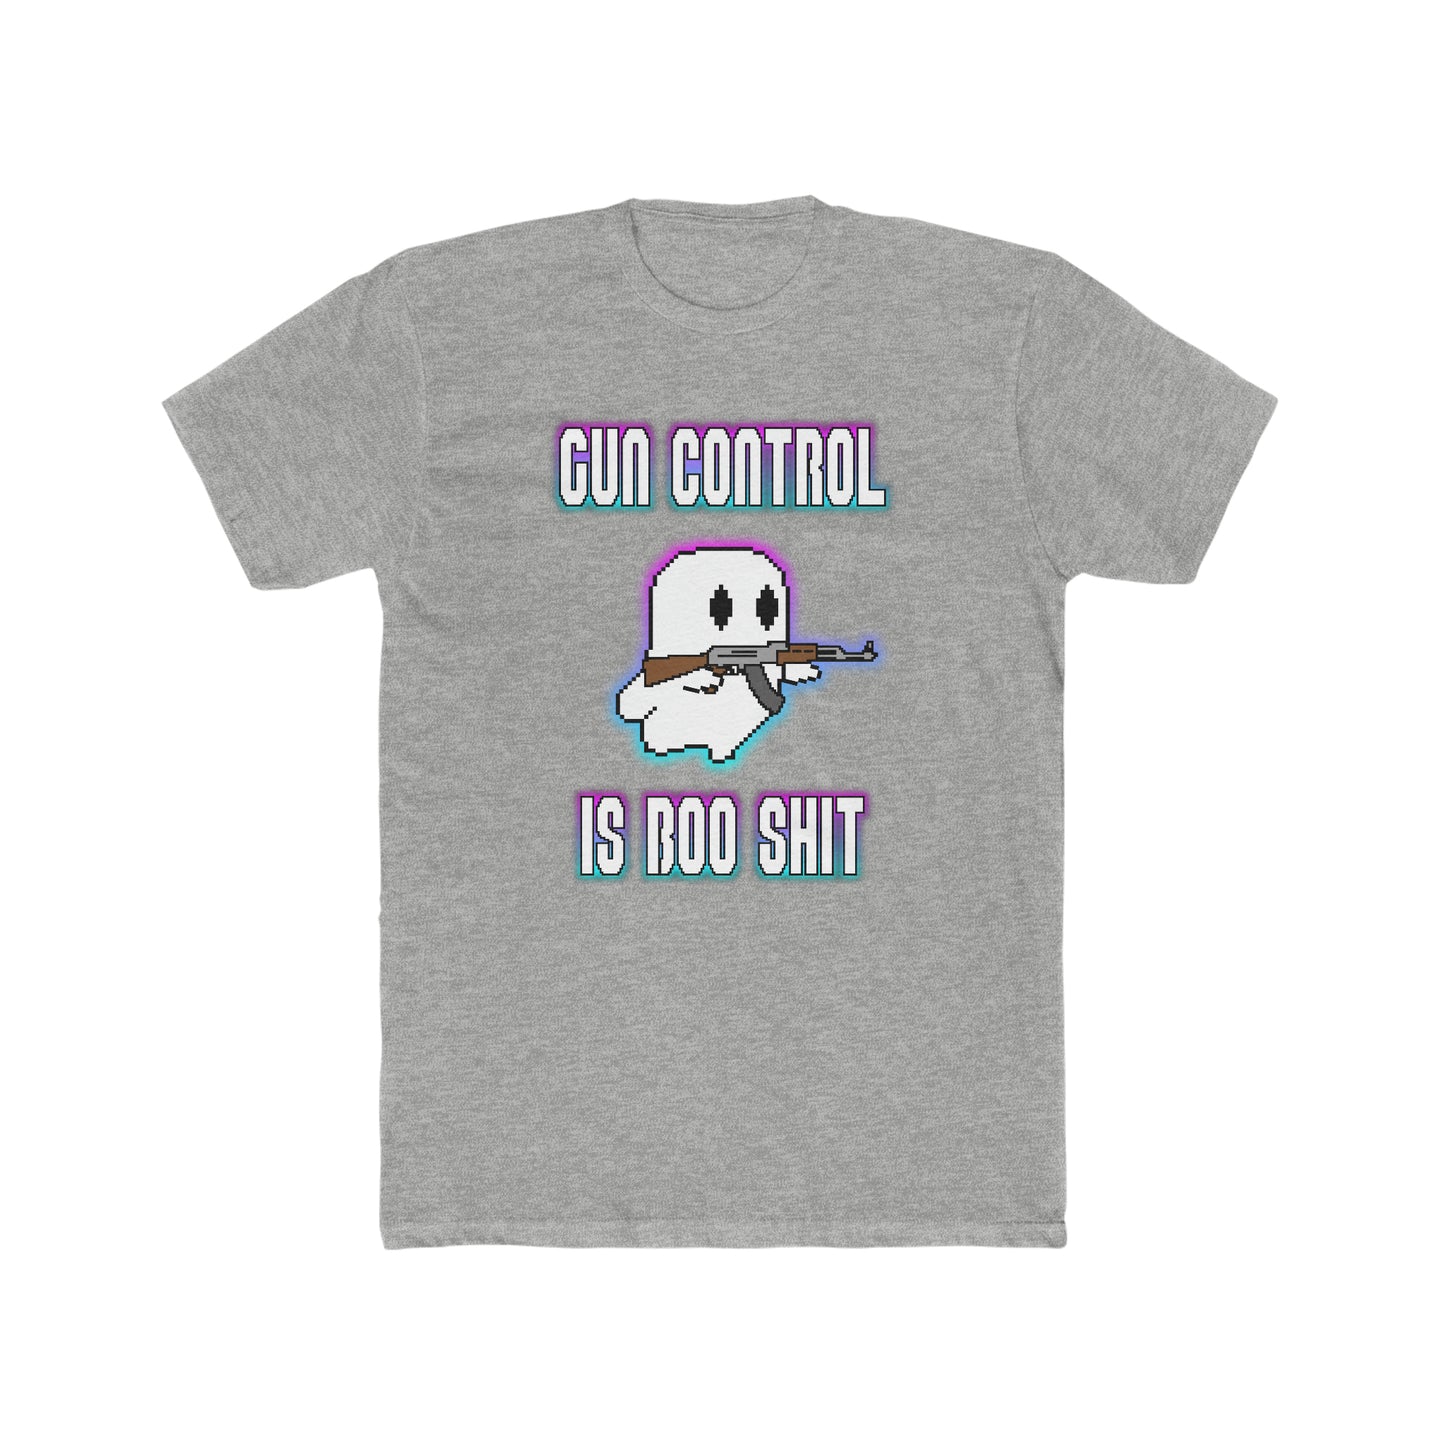 "Gun Control" Men's Cotton Crew Tee